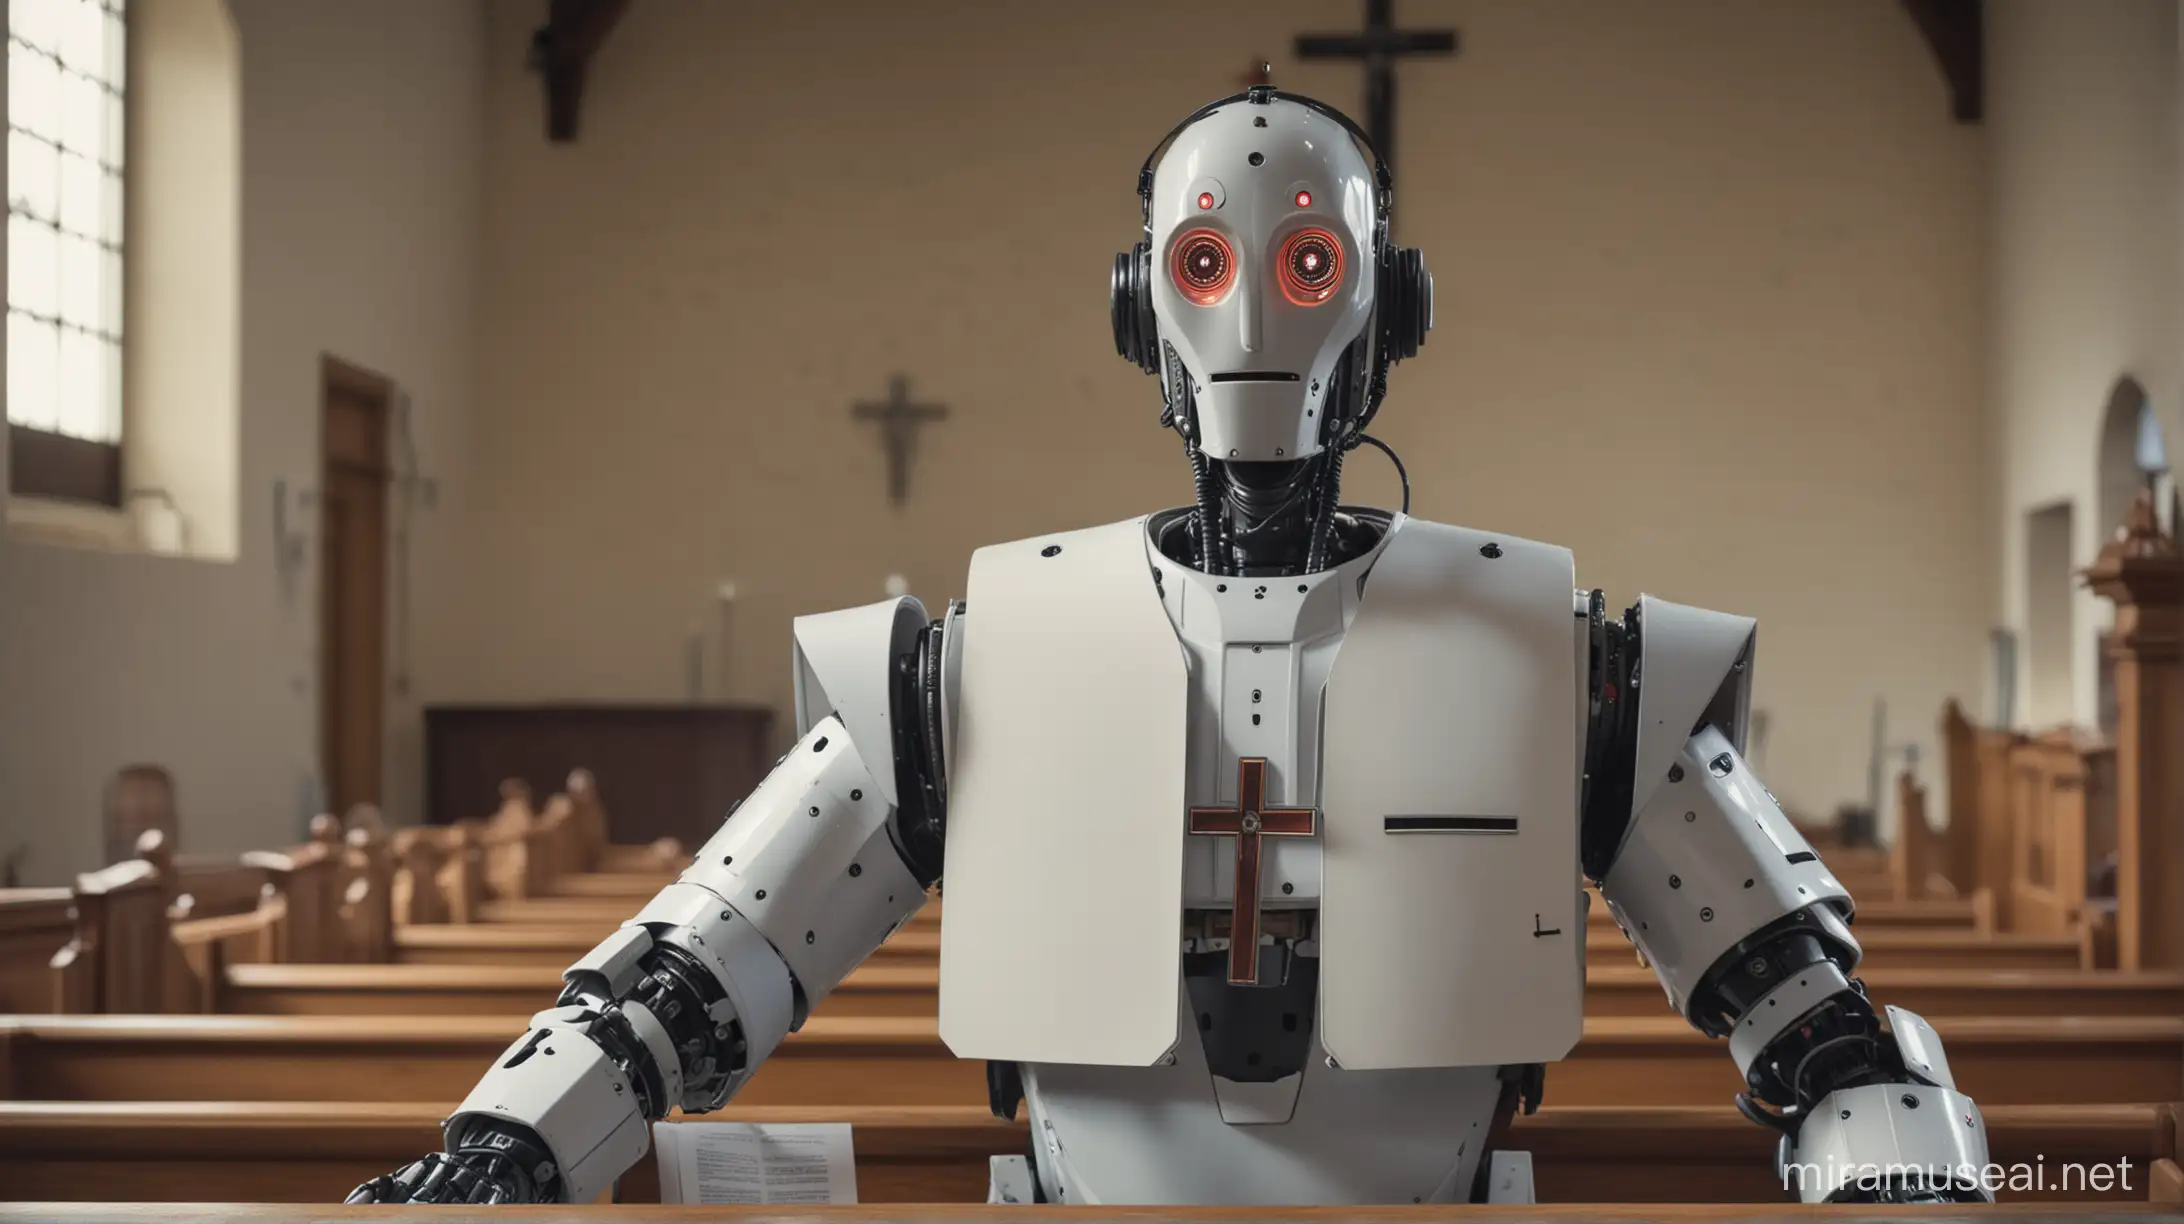 Robot Protestant Pastor Leading Church Service